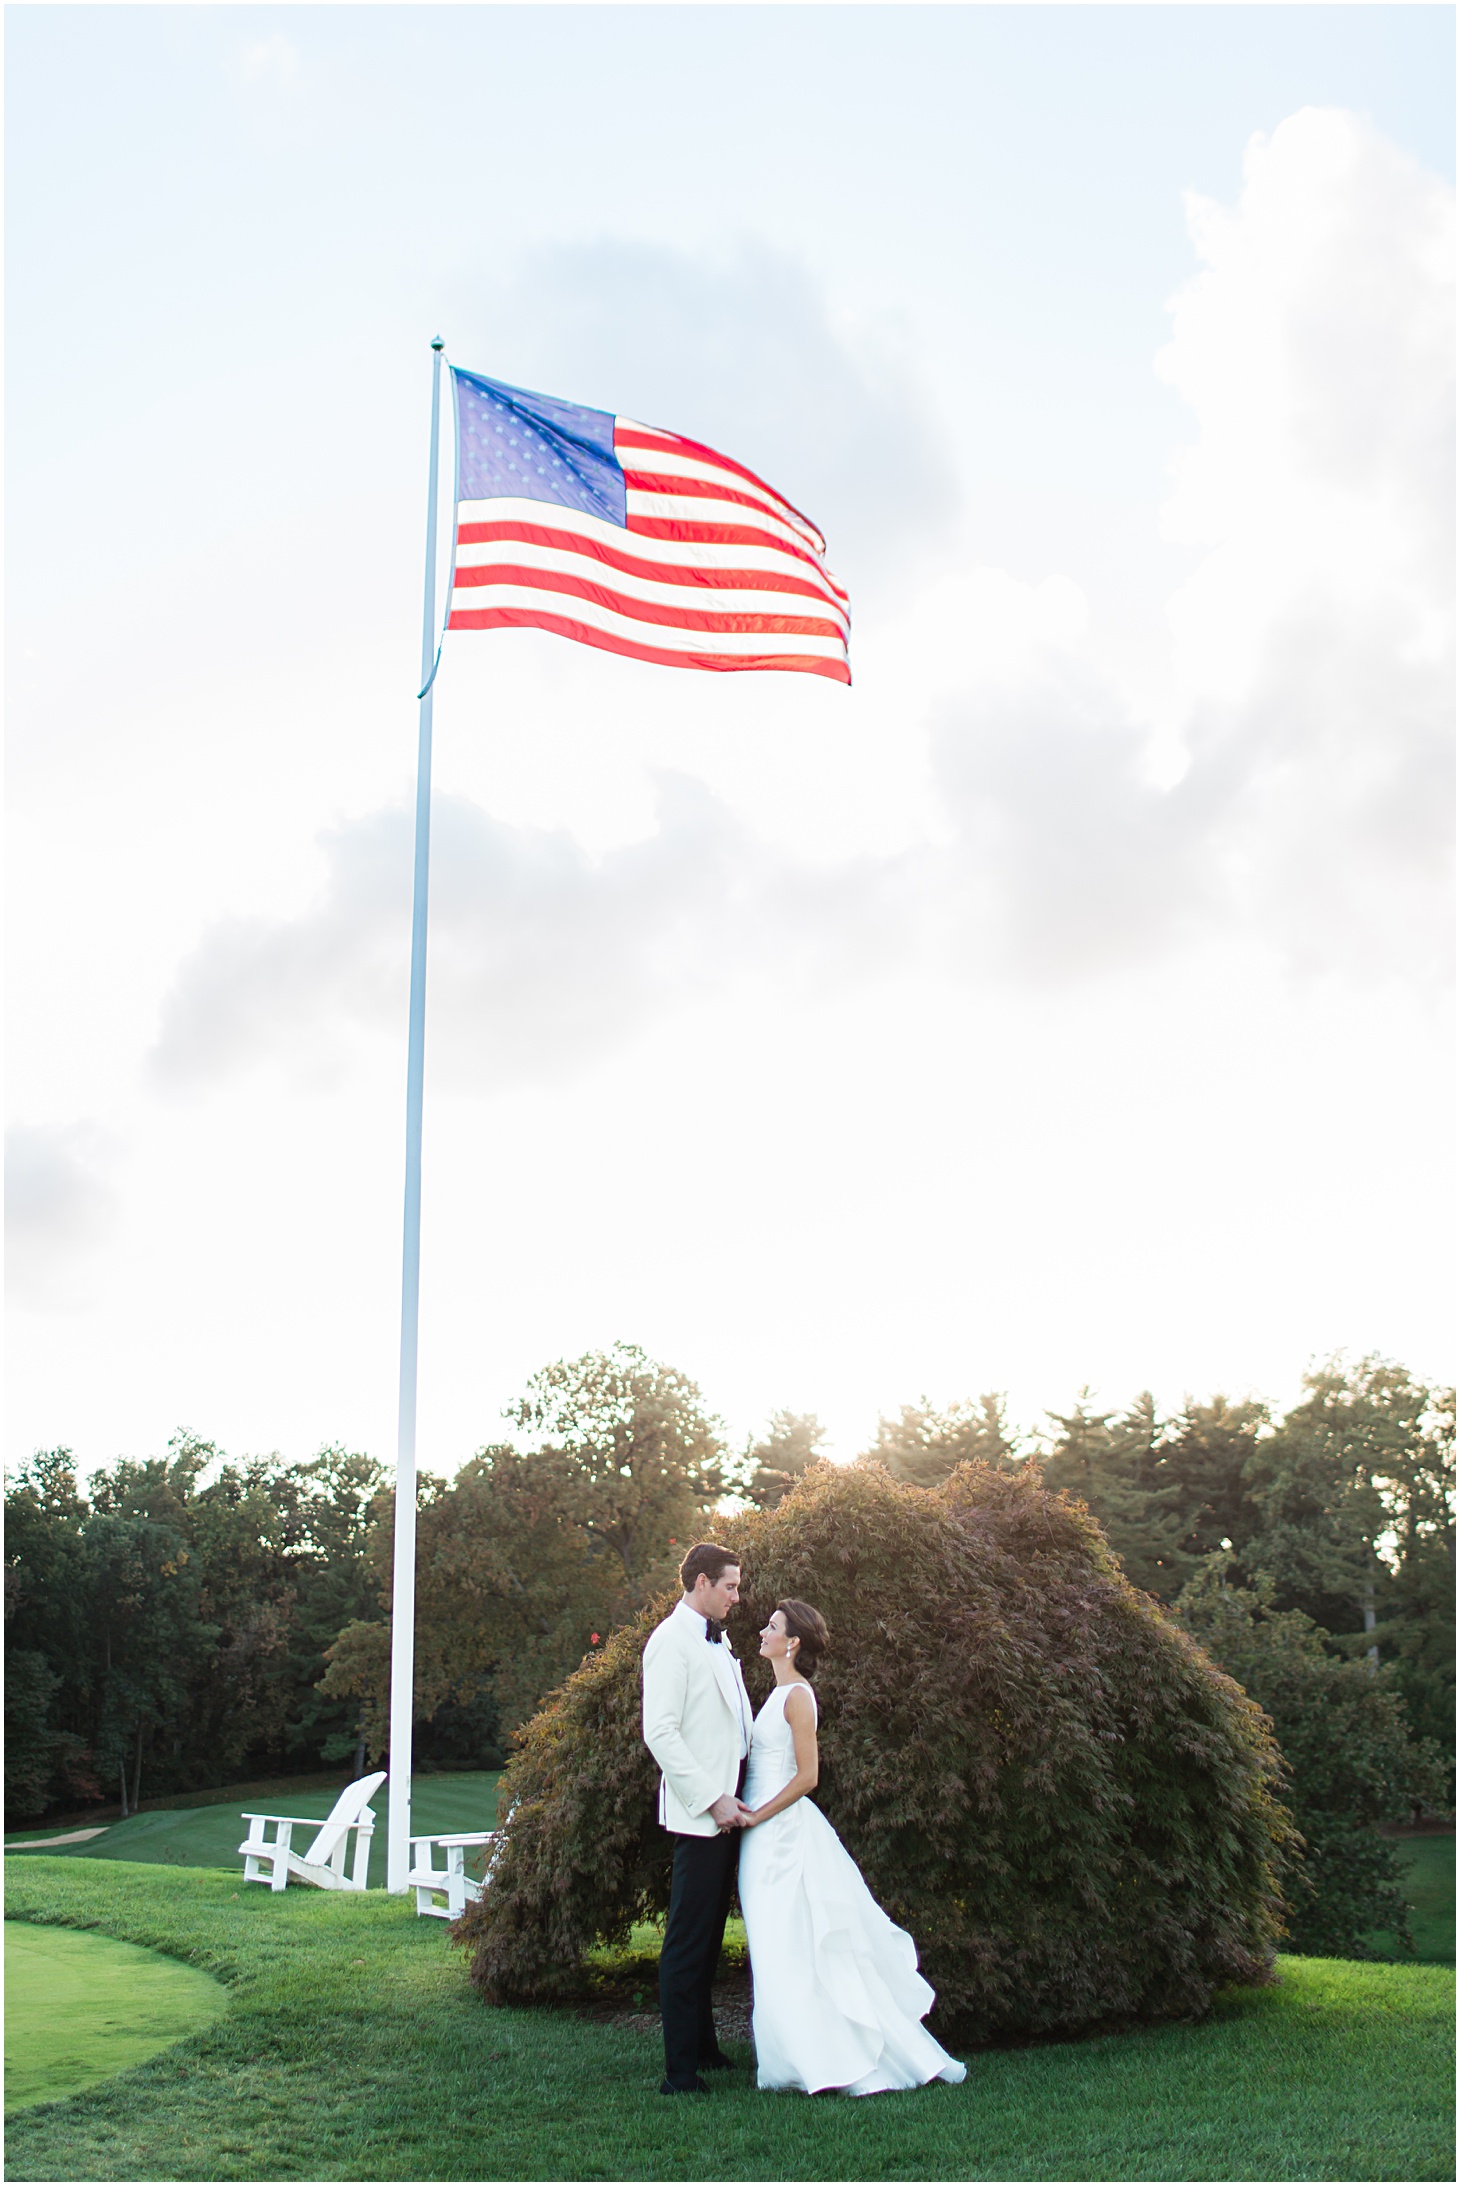 Bride & Groom American Flag | Top Washington DC wedding photographer Sarah Bradshaw